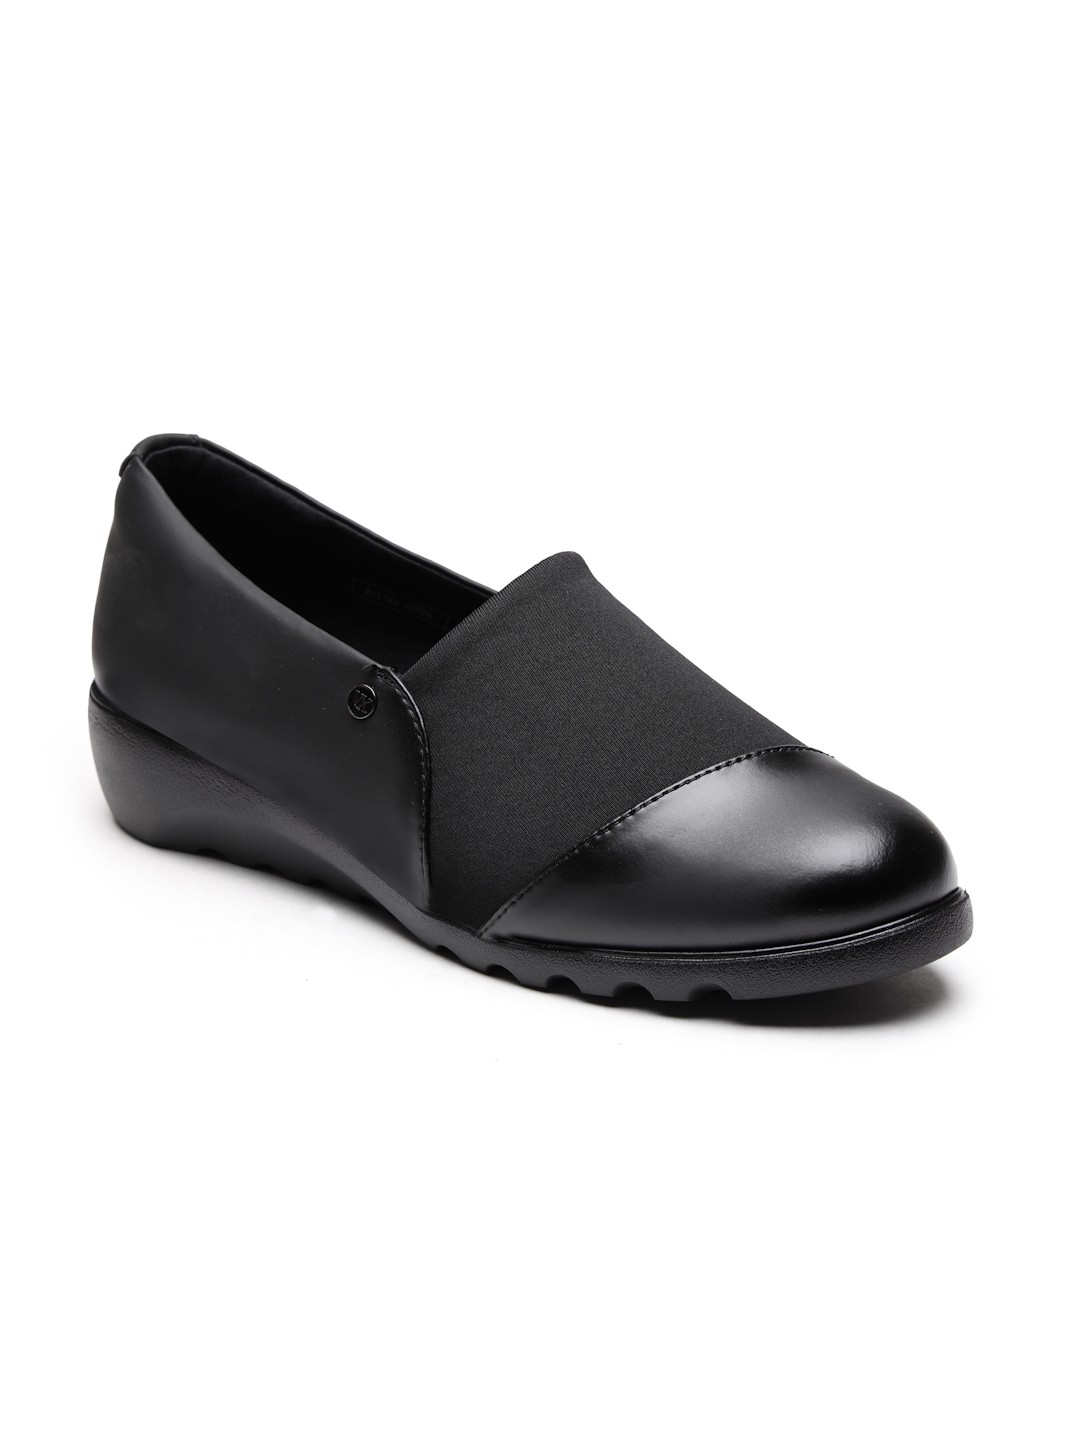 VON WELLX GERMANY comfort women's black casual shoes AYLA